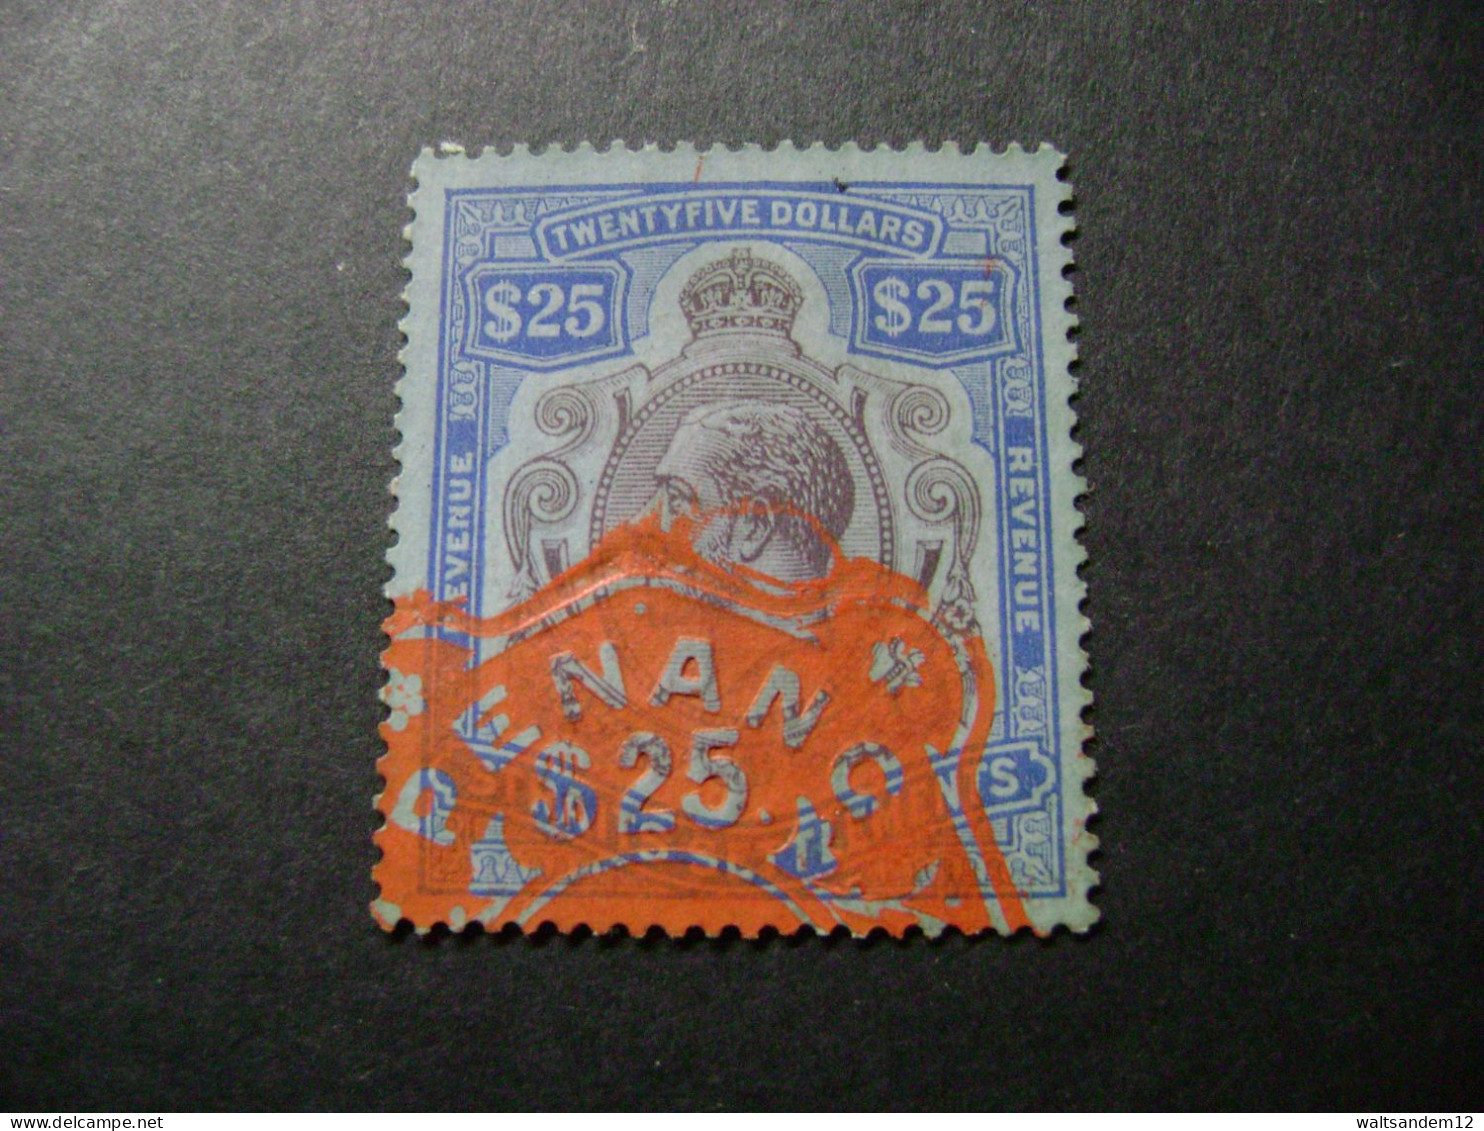 Malaya (Straits Settlements) 1936 KGV $25 Key Type - Used Revenue Stamp - Straits Settlements